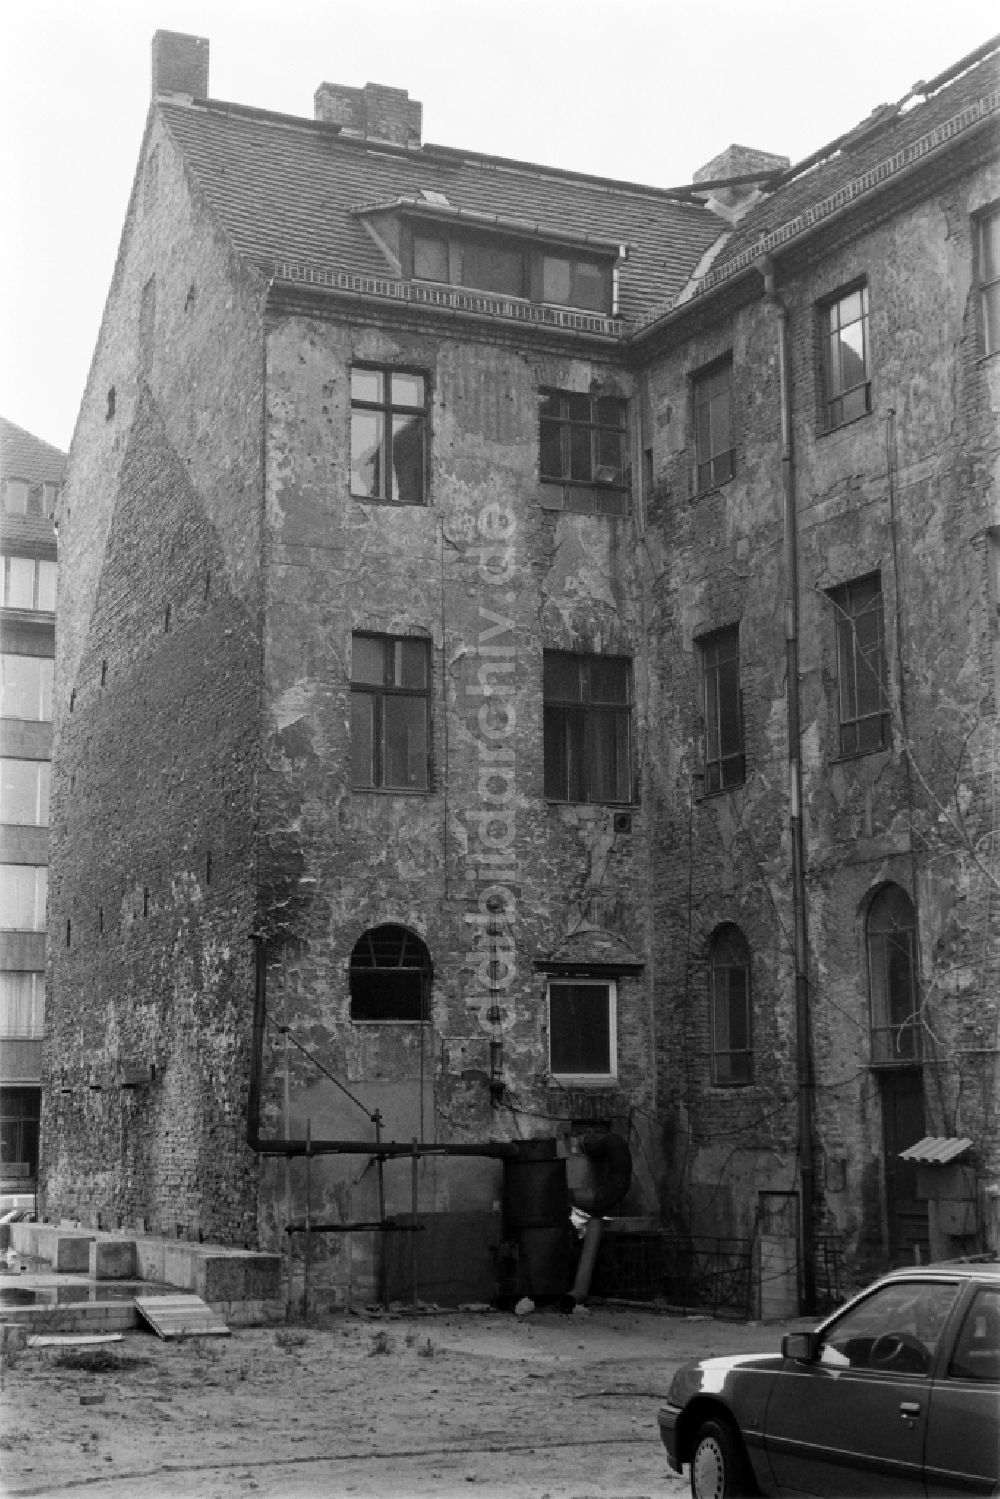 Berlin: Verfallene Altbauten in Berlin - Mitte, der ehemaligen Hauptstadt der DDR, Deutsche Demokratische Republik